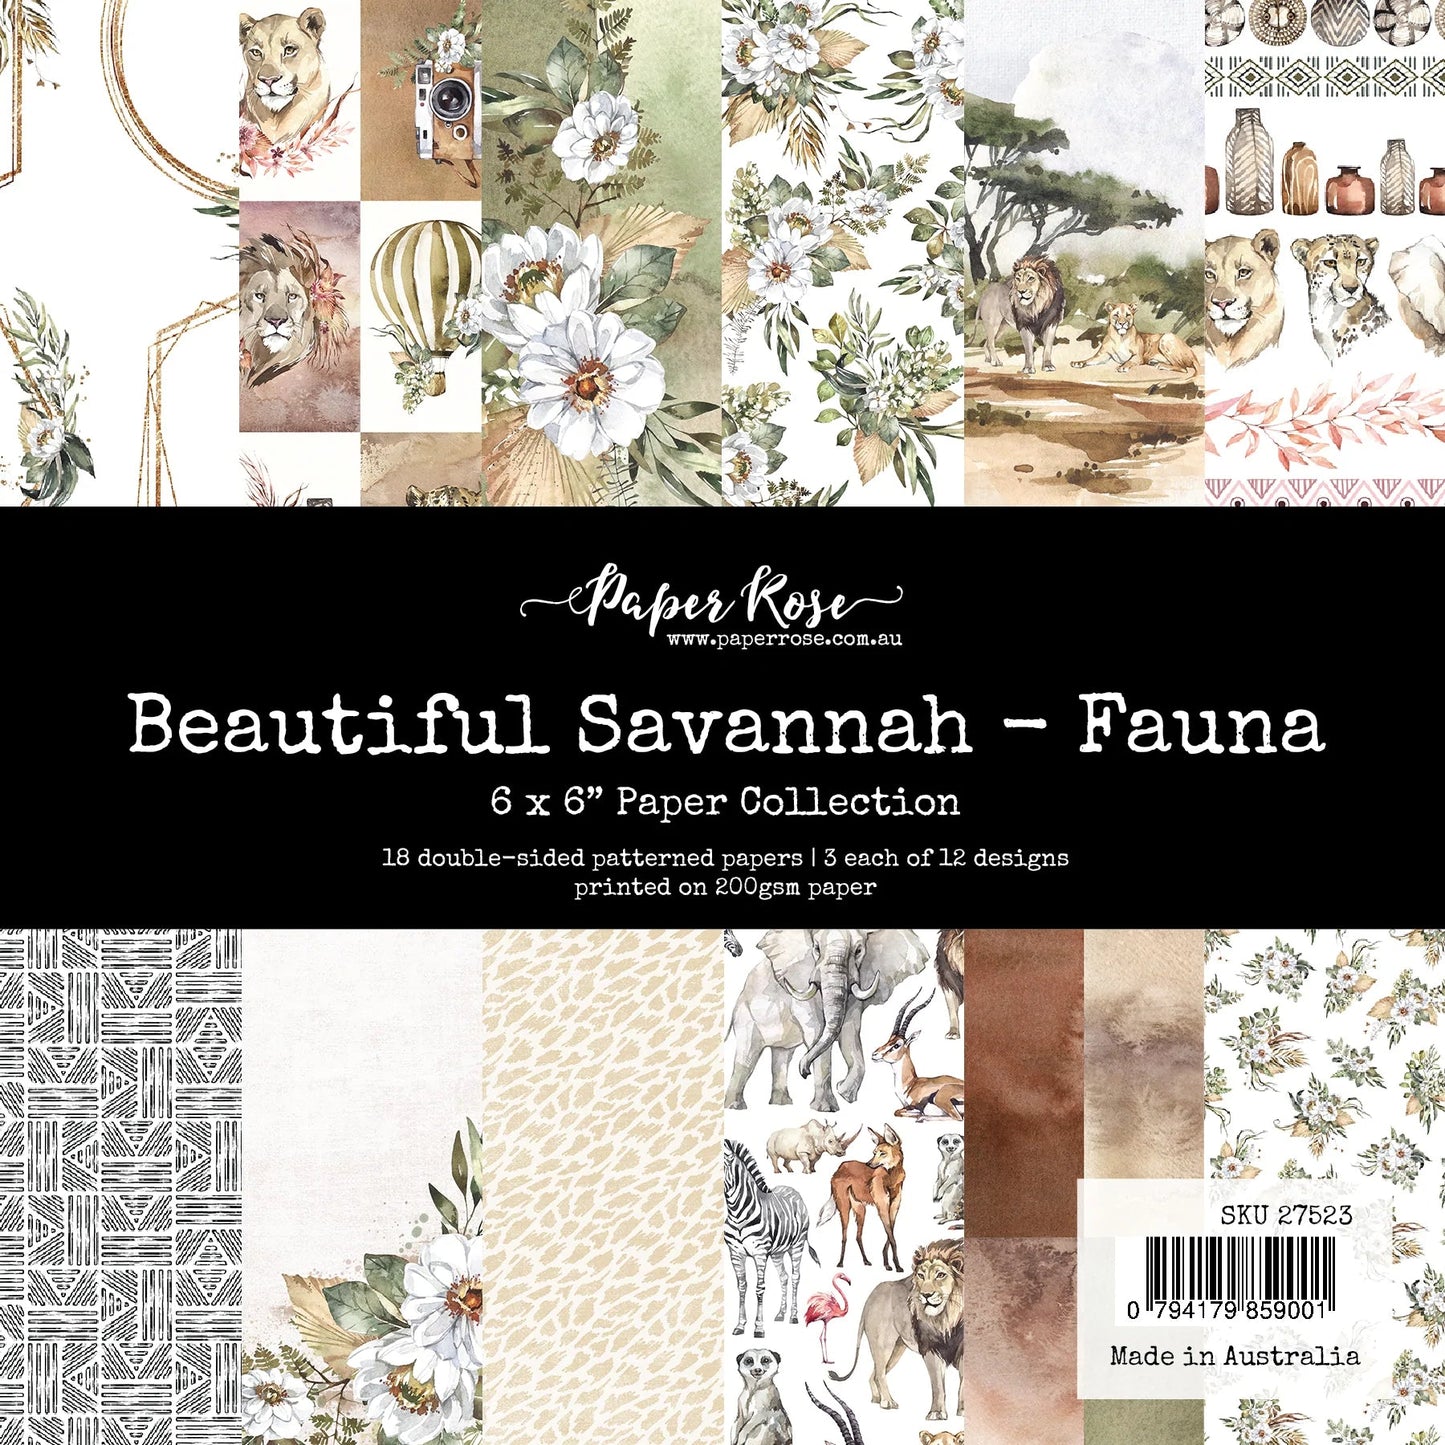 Paper Rose - Beautiful Savannah - Fauna 6x6 Paper Collection Arts & Crafts Paper Rose